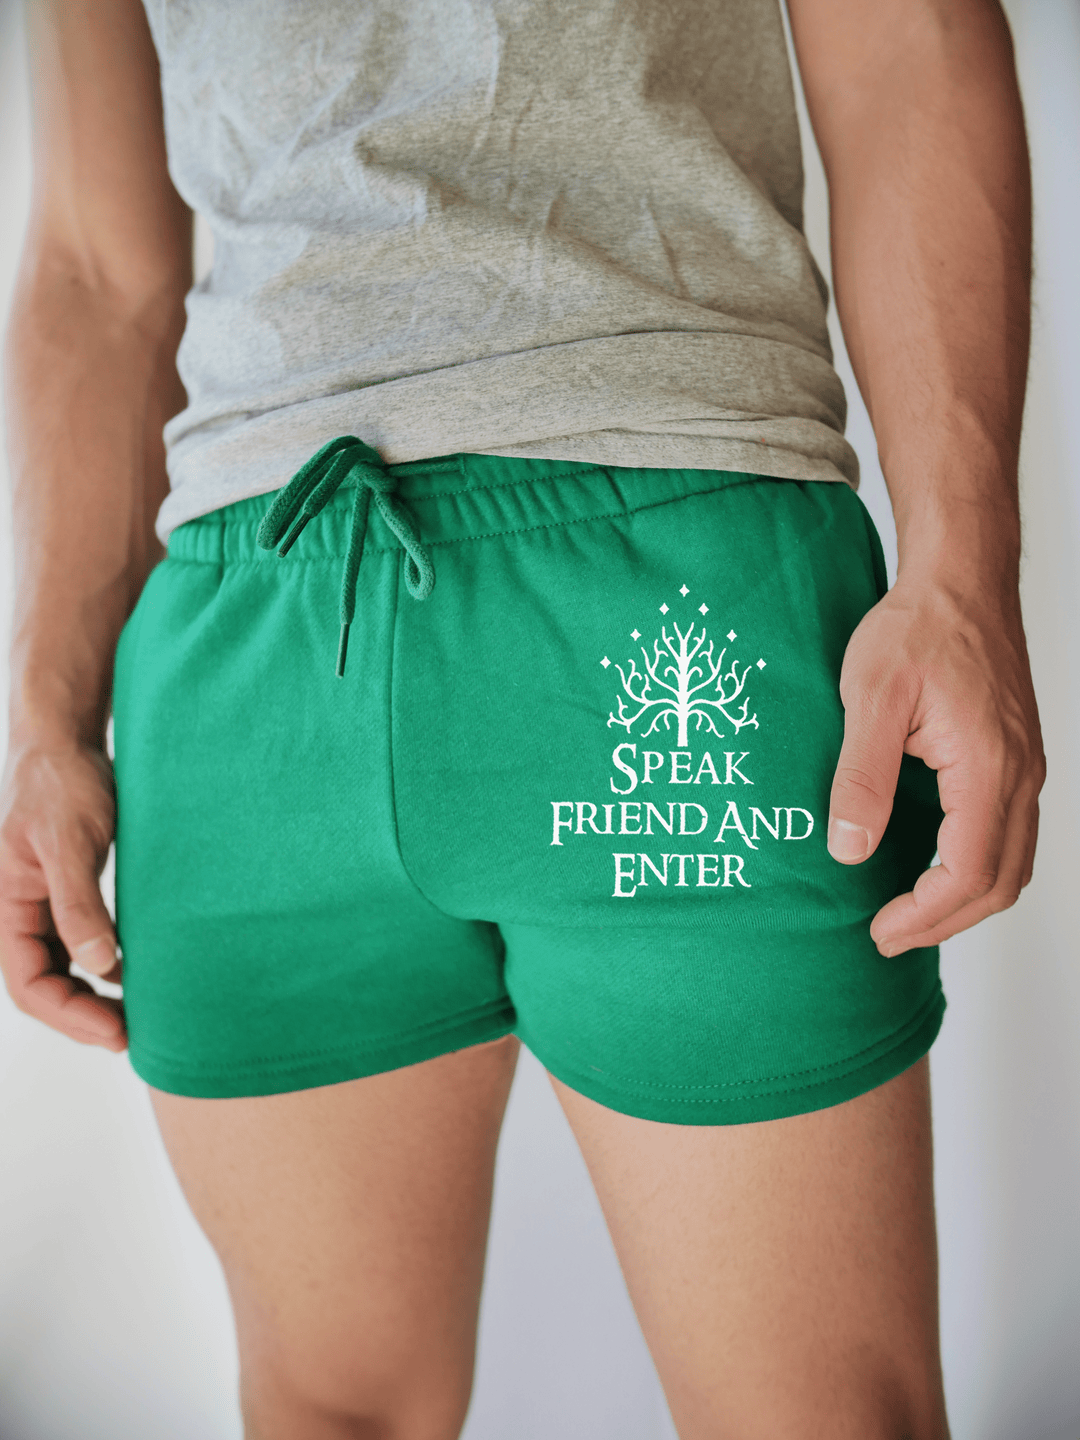 PixelThat Punderwear Shorts Kelly Green / S / Front Speak Friend And Enter Men's Gym Shorts